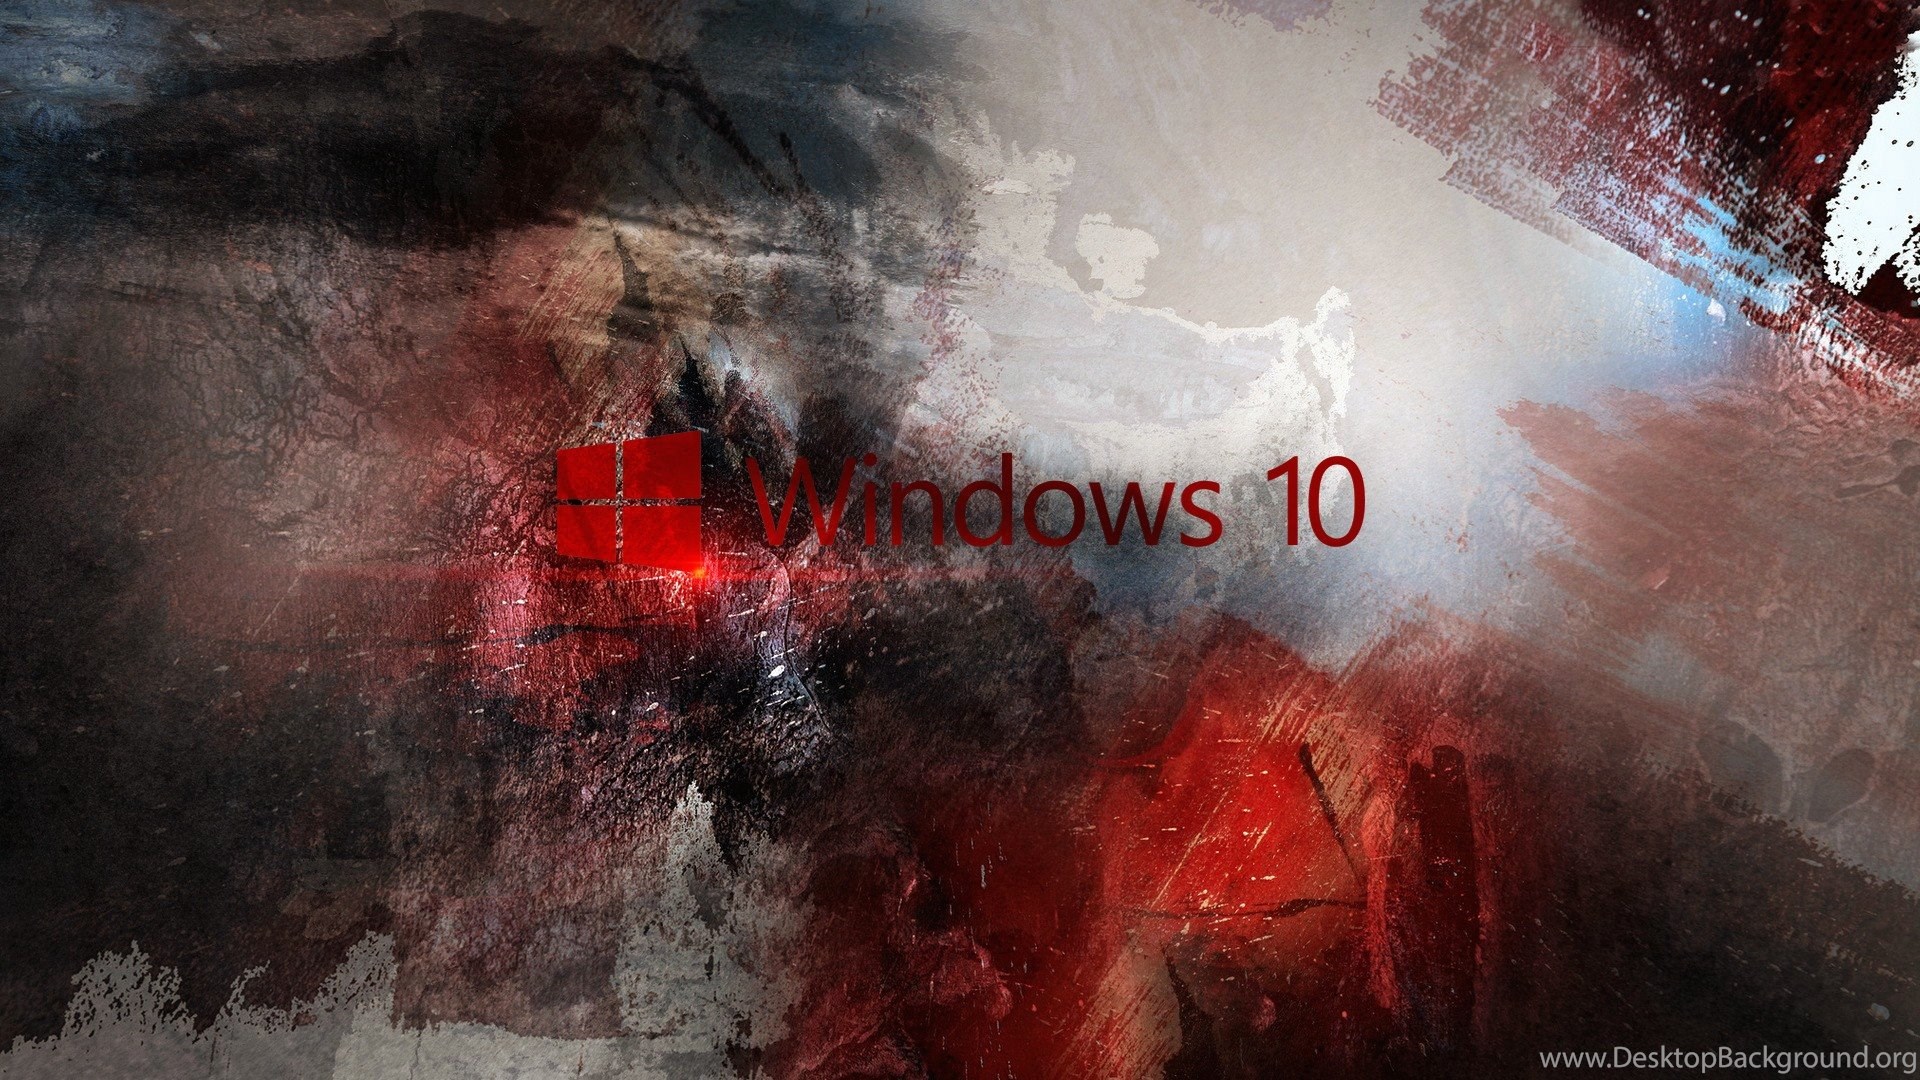 Microsoft Windows 10 Logo 1920x1080 (1080p) Wallpaper HD. Desktop Background